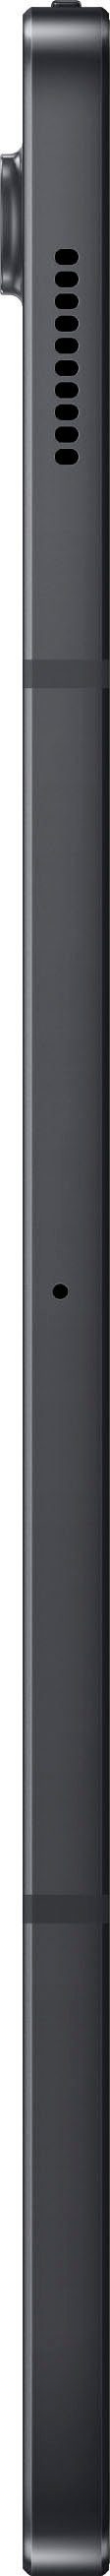 Samsung Galaxy Tab S7 LTE Mystic Black Tablet GB, (12,4", 64 FE Android, 5G)